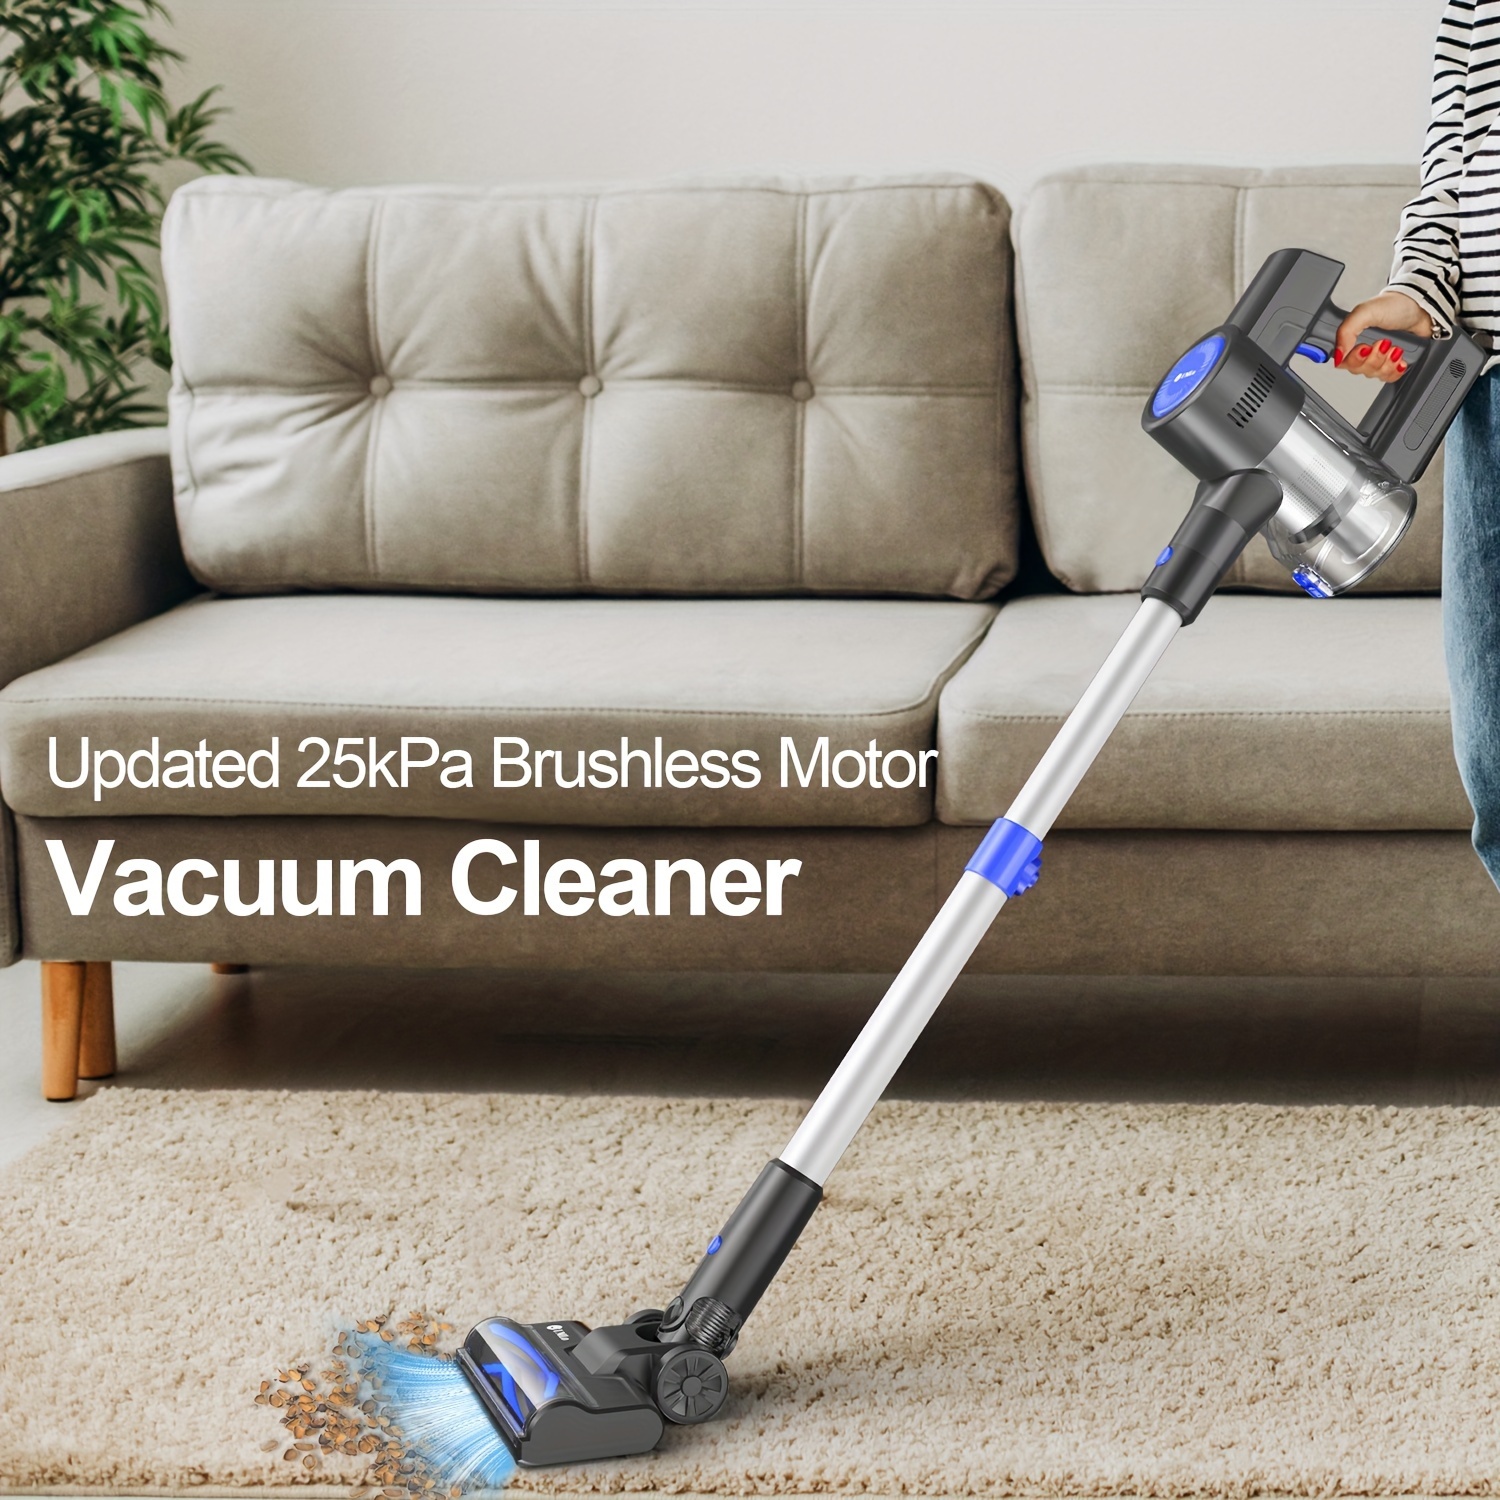 

Umlo Cordless Vacuum Cleaner, 25kpa Powerful Suction Stick Vacuum, Lightweight S500